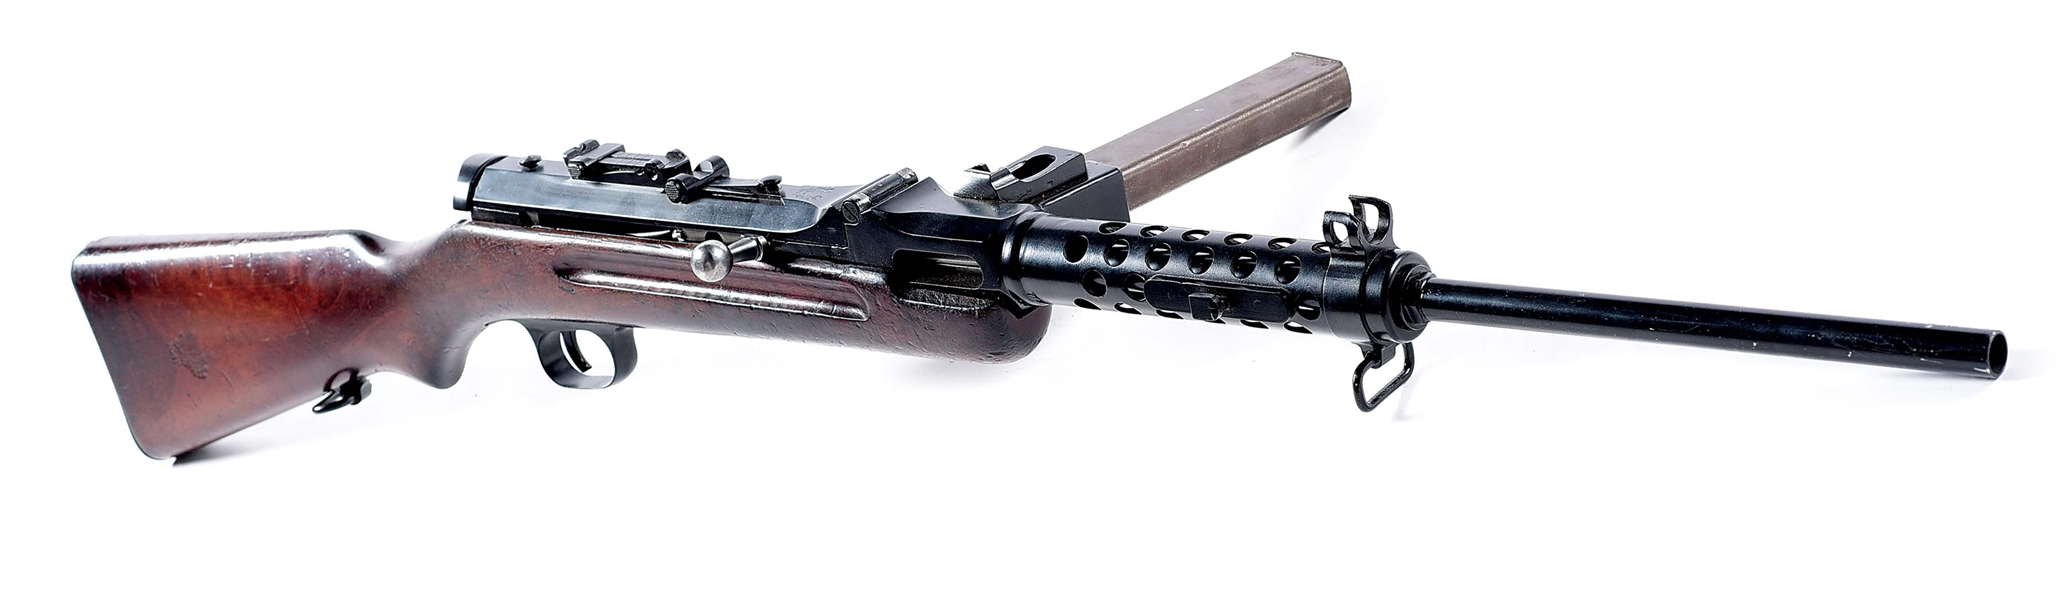 (M) MK GUN MODS STEYR SOLOTHURN MP-34O SEMI-AUTOMATIC RIFLE WITH ACCESSORIES.